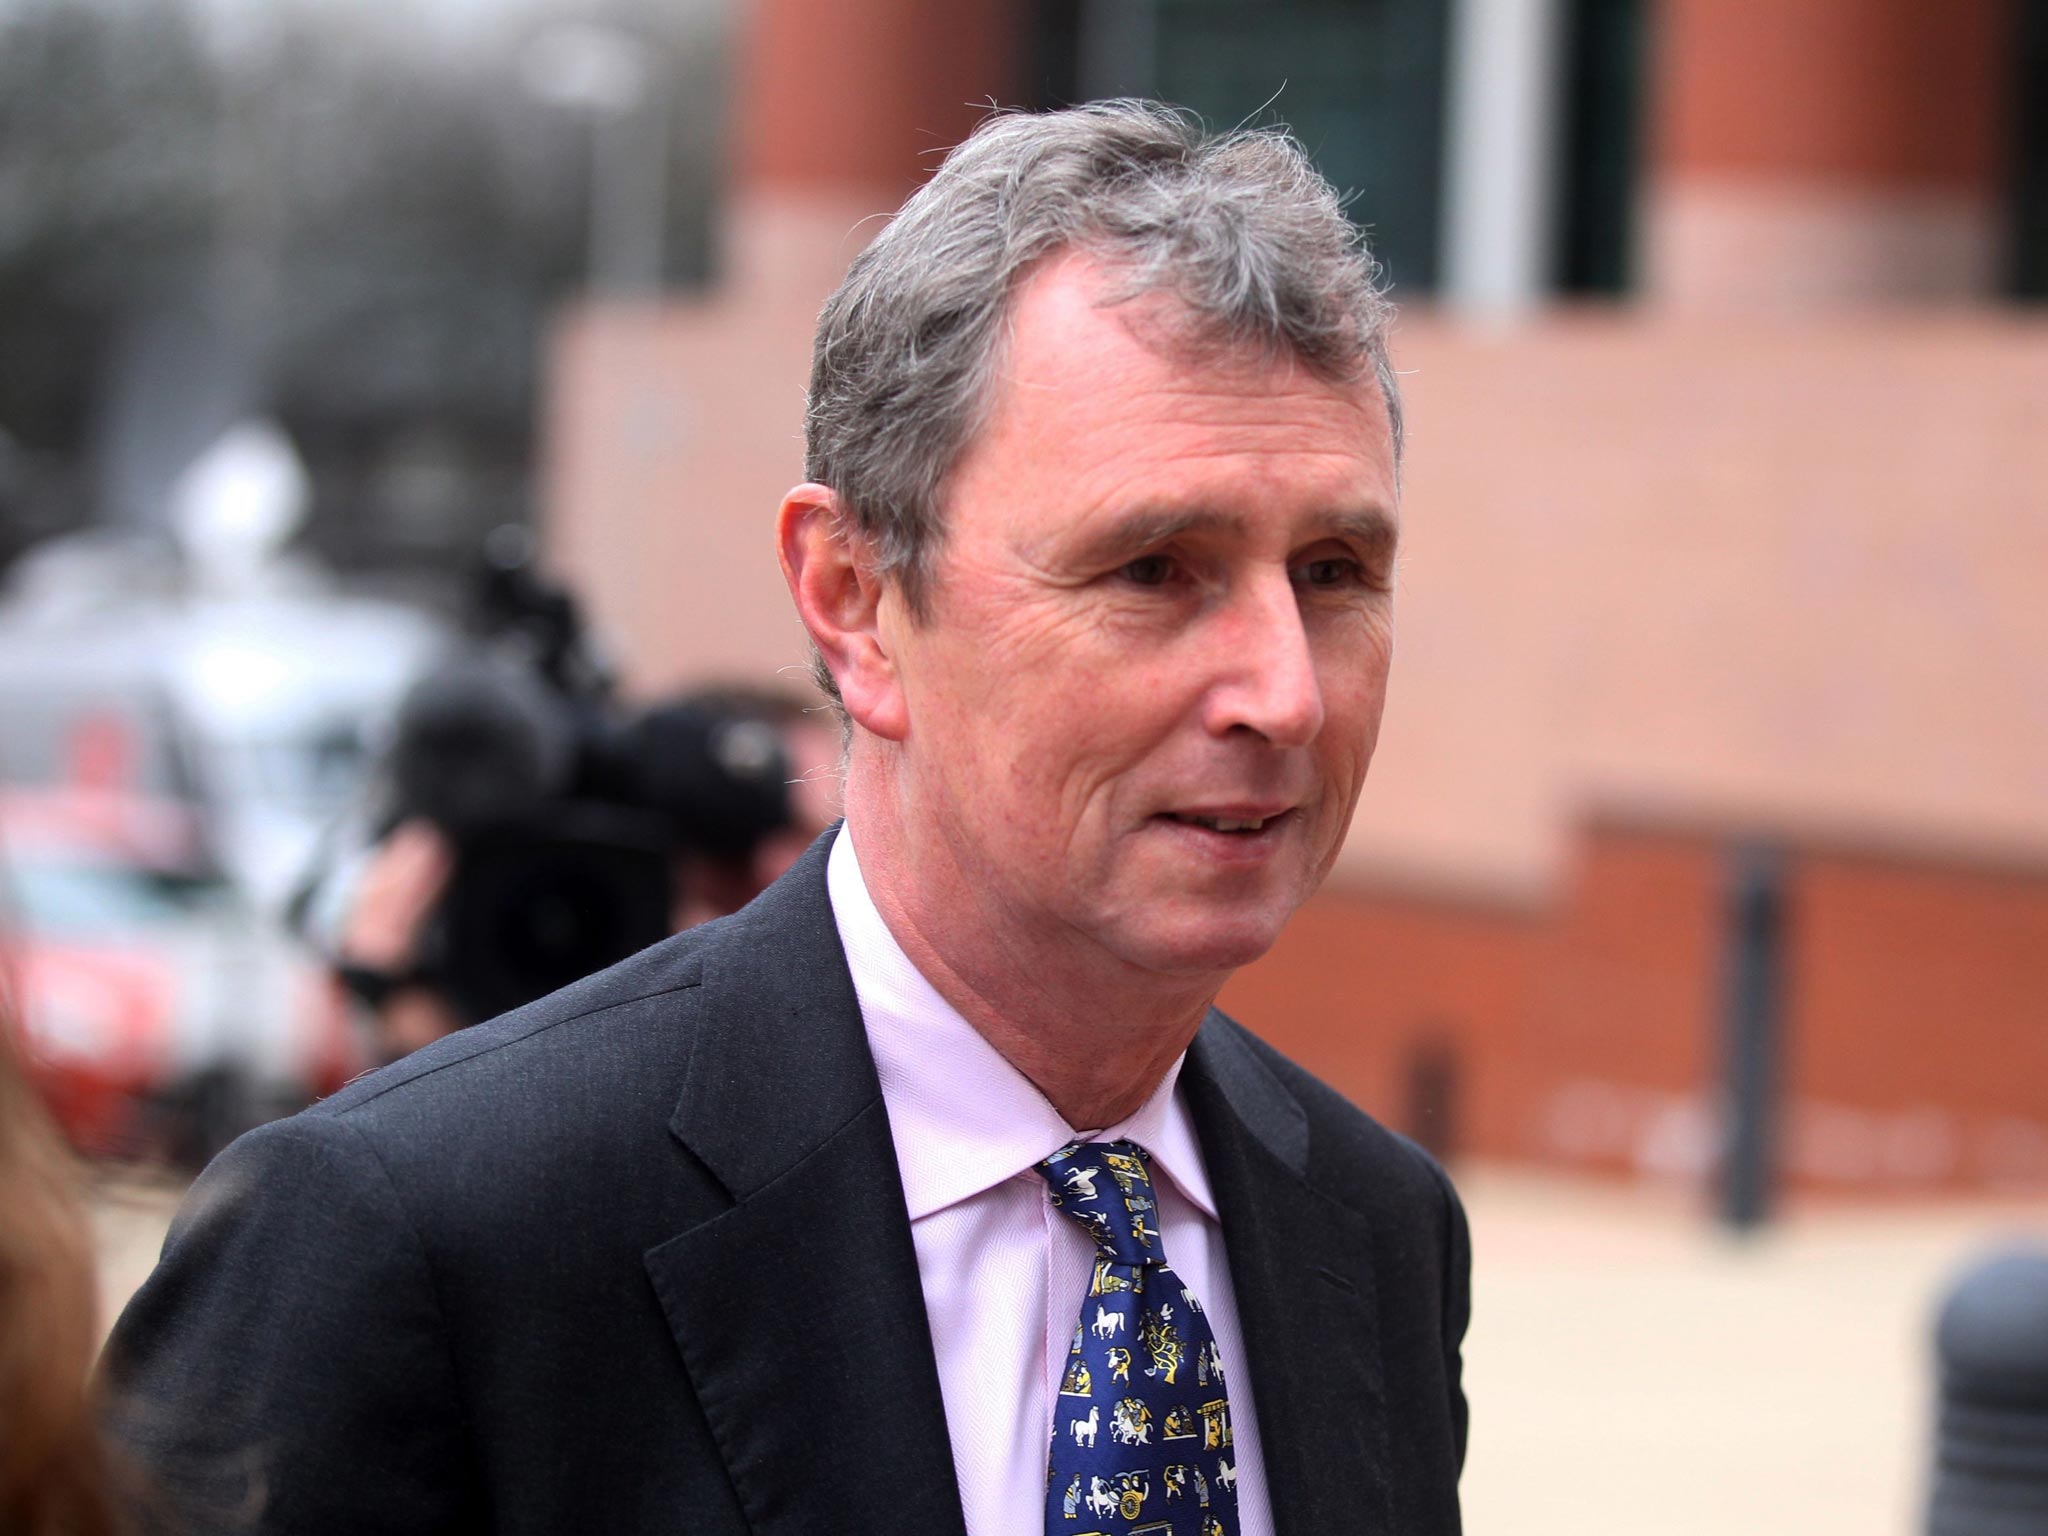 The former deputy speaker of the House of Commons Nigel Evans arrives at court